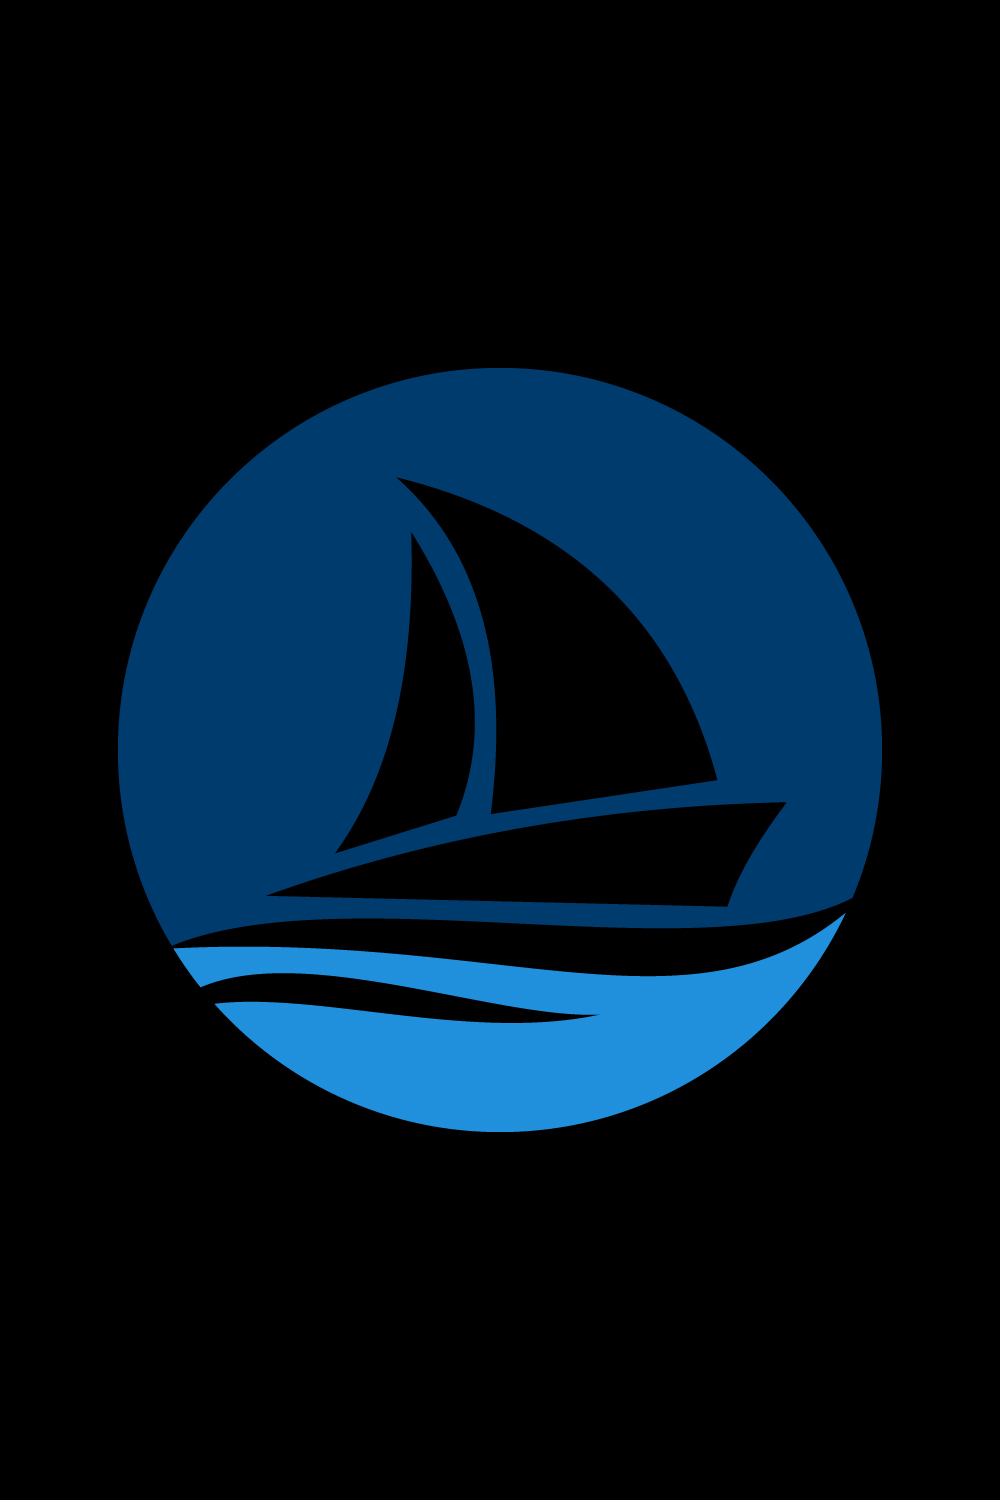 Creative Boat logo design, Vector design template pinterest preview image.